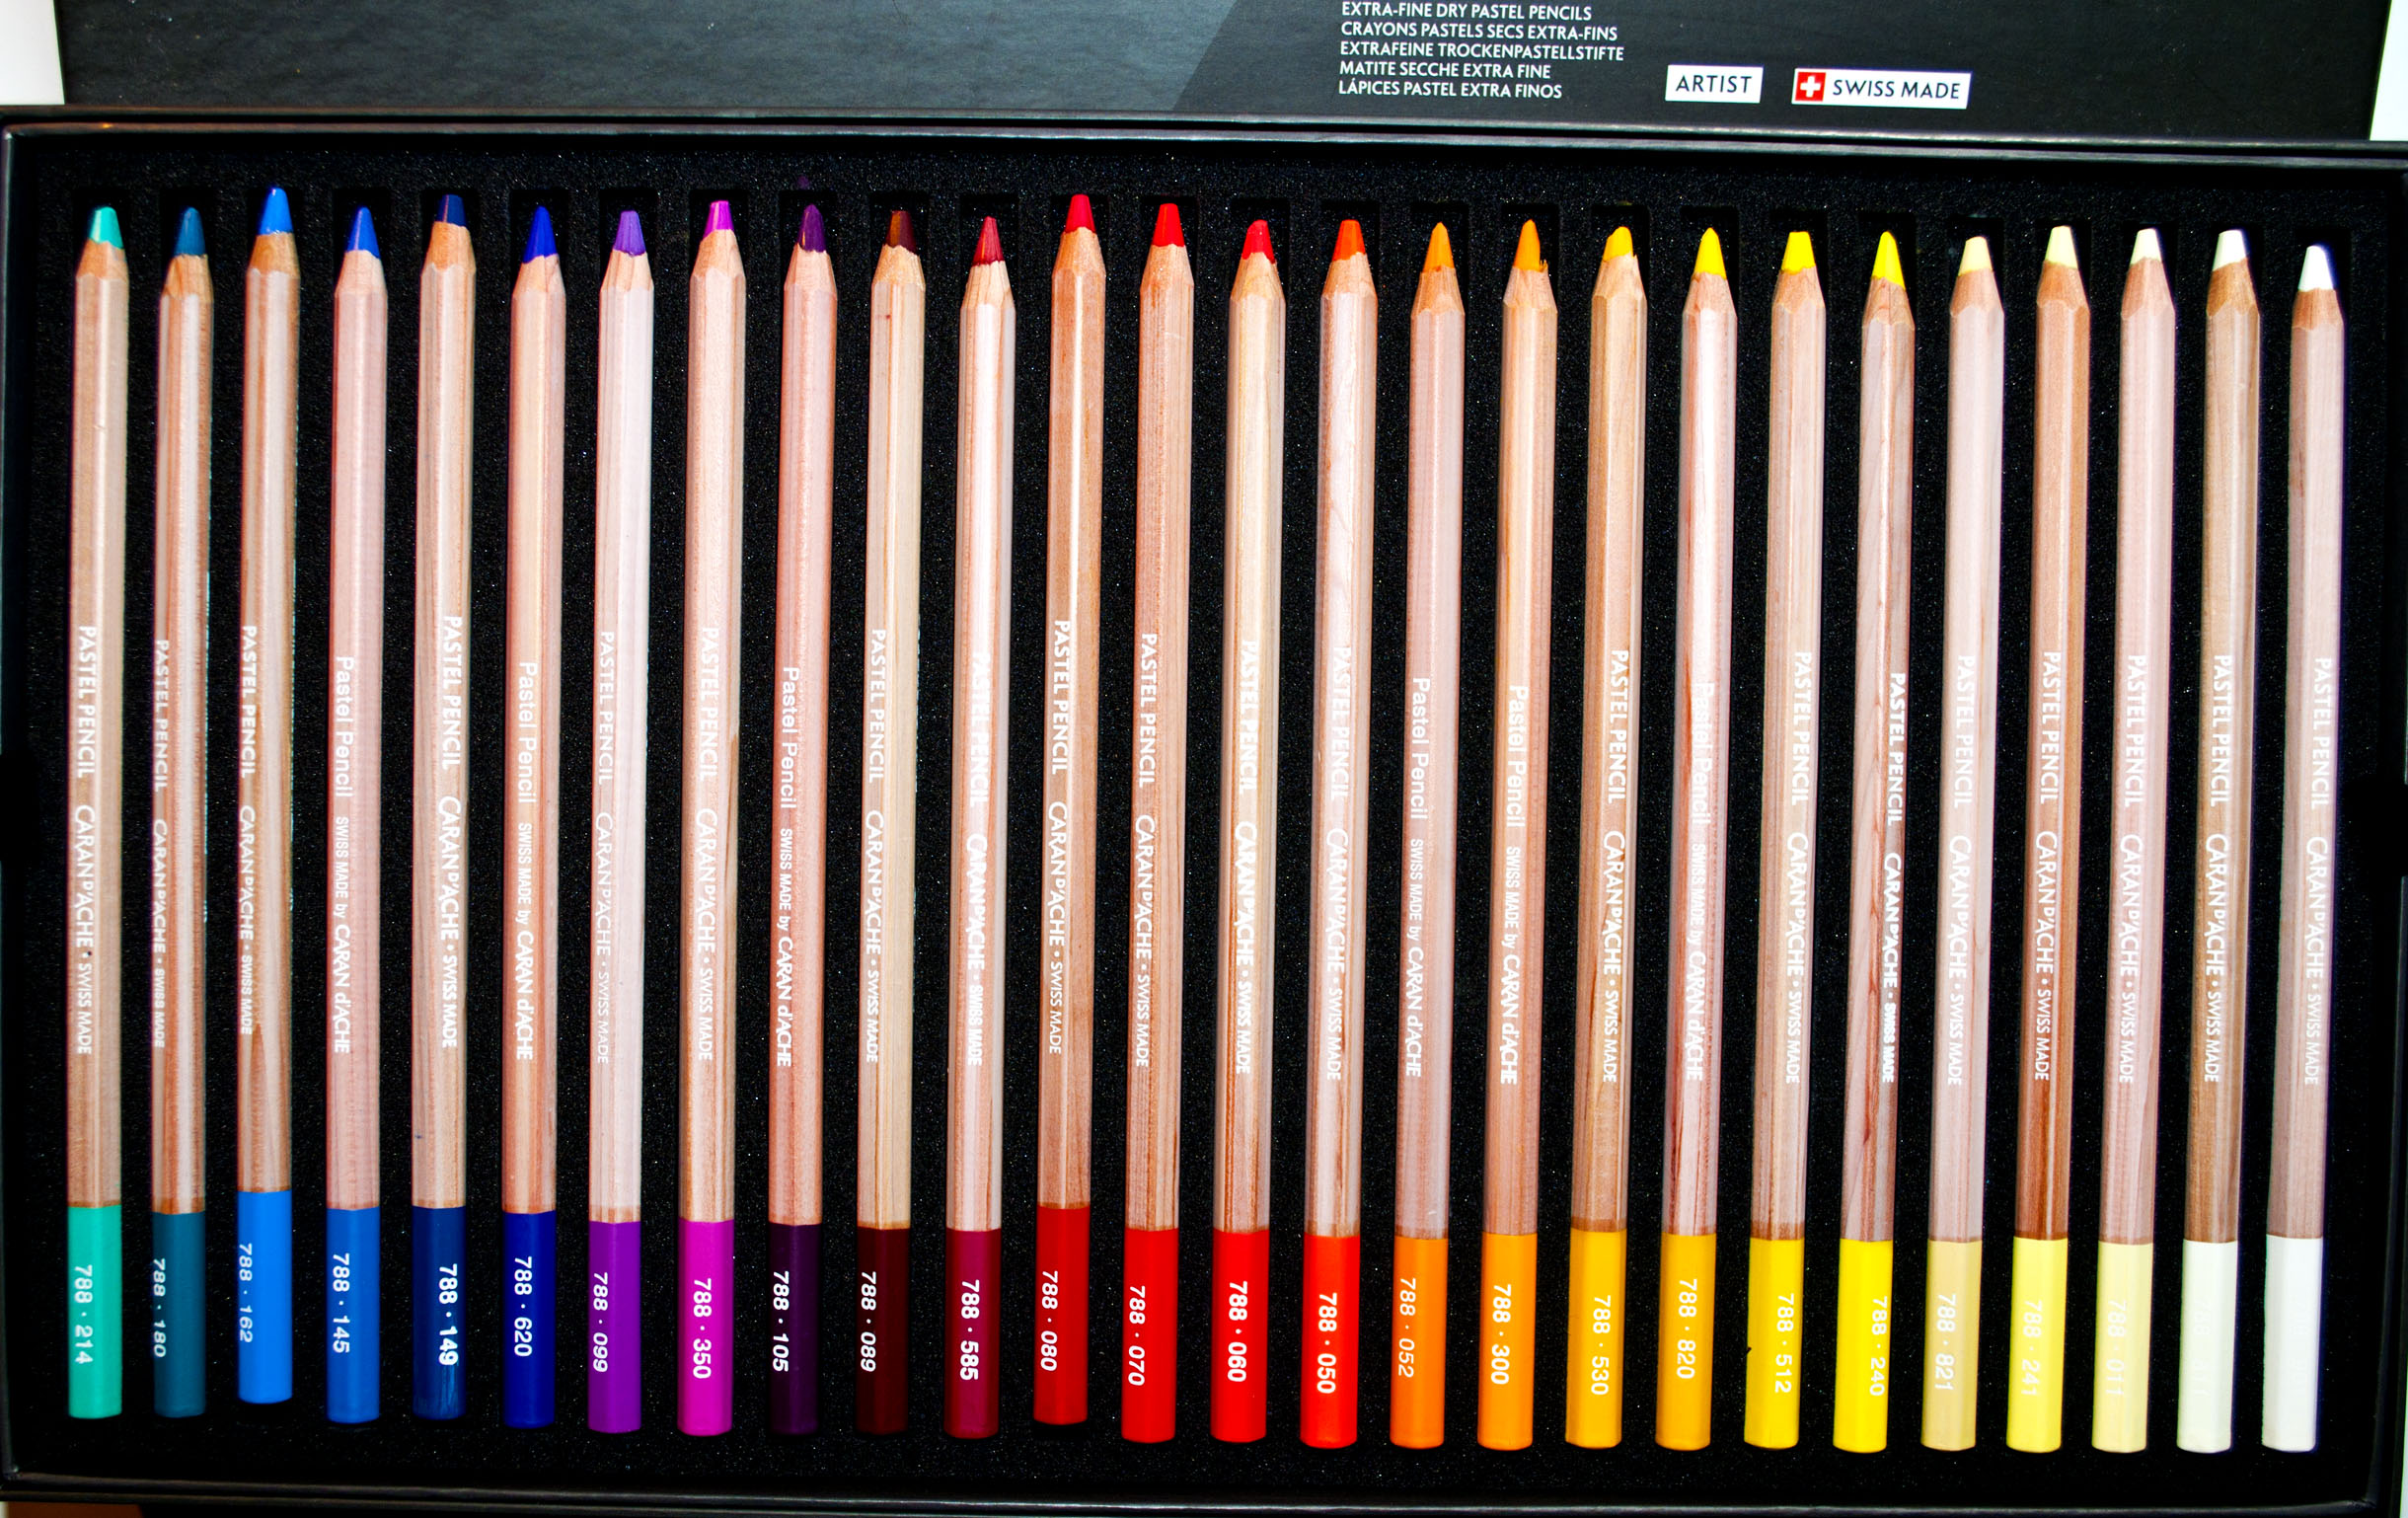 Caran d'Ache Pastel Pencils